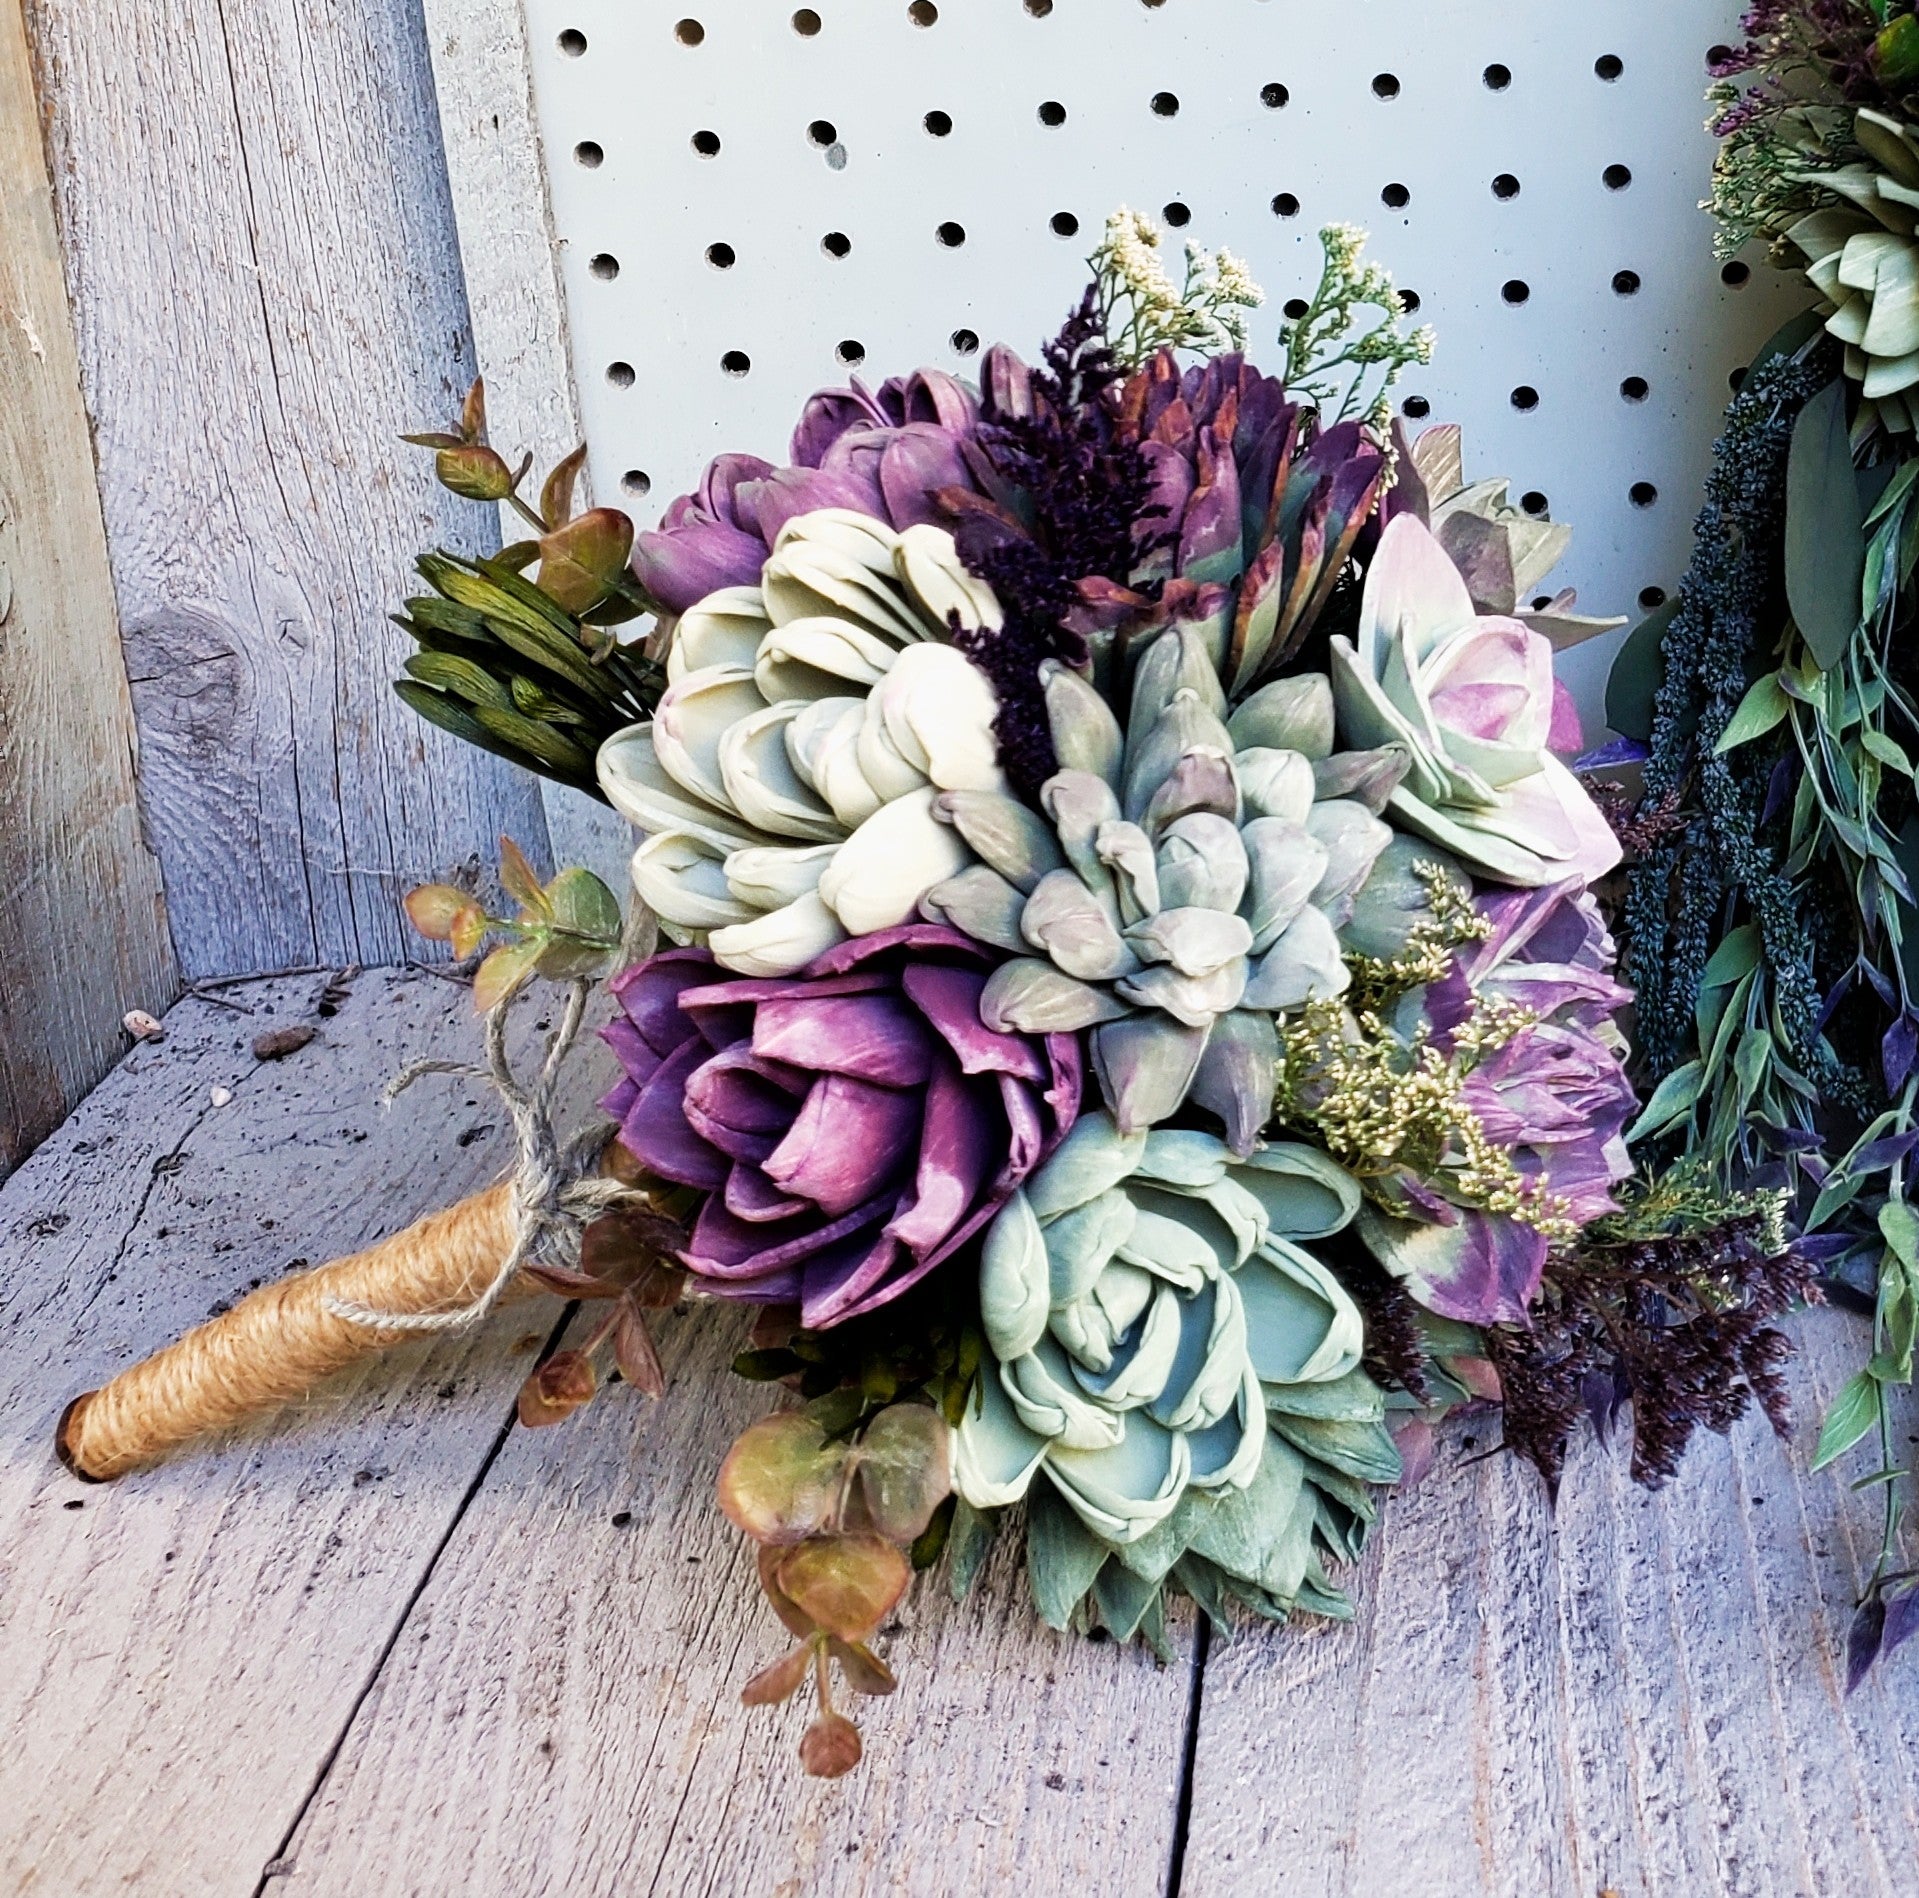 Wood Flower succulent wedding bouquet